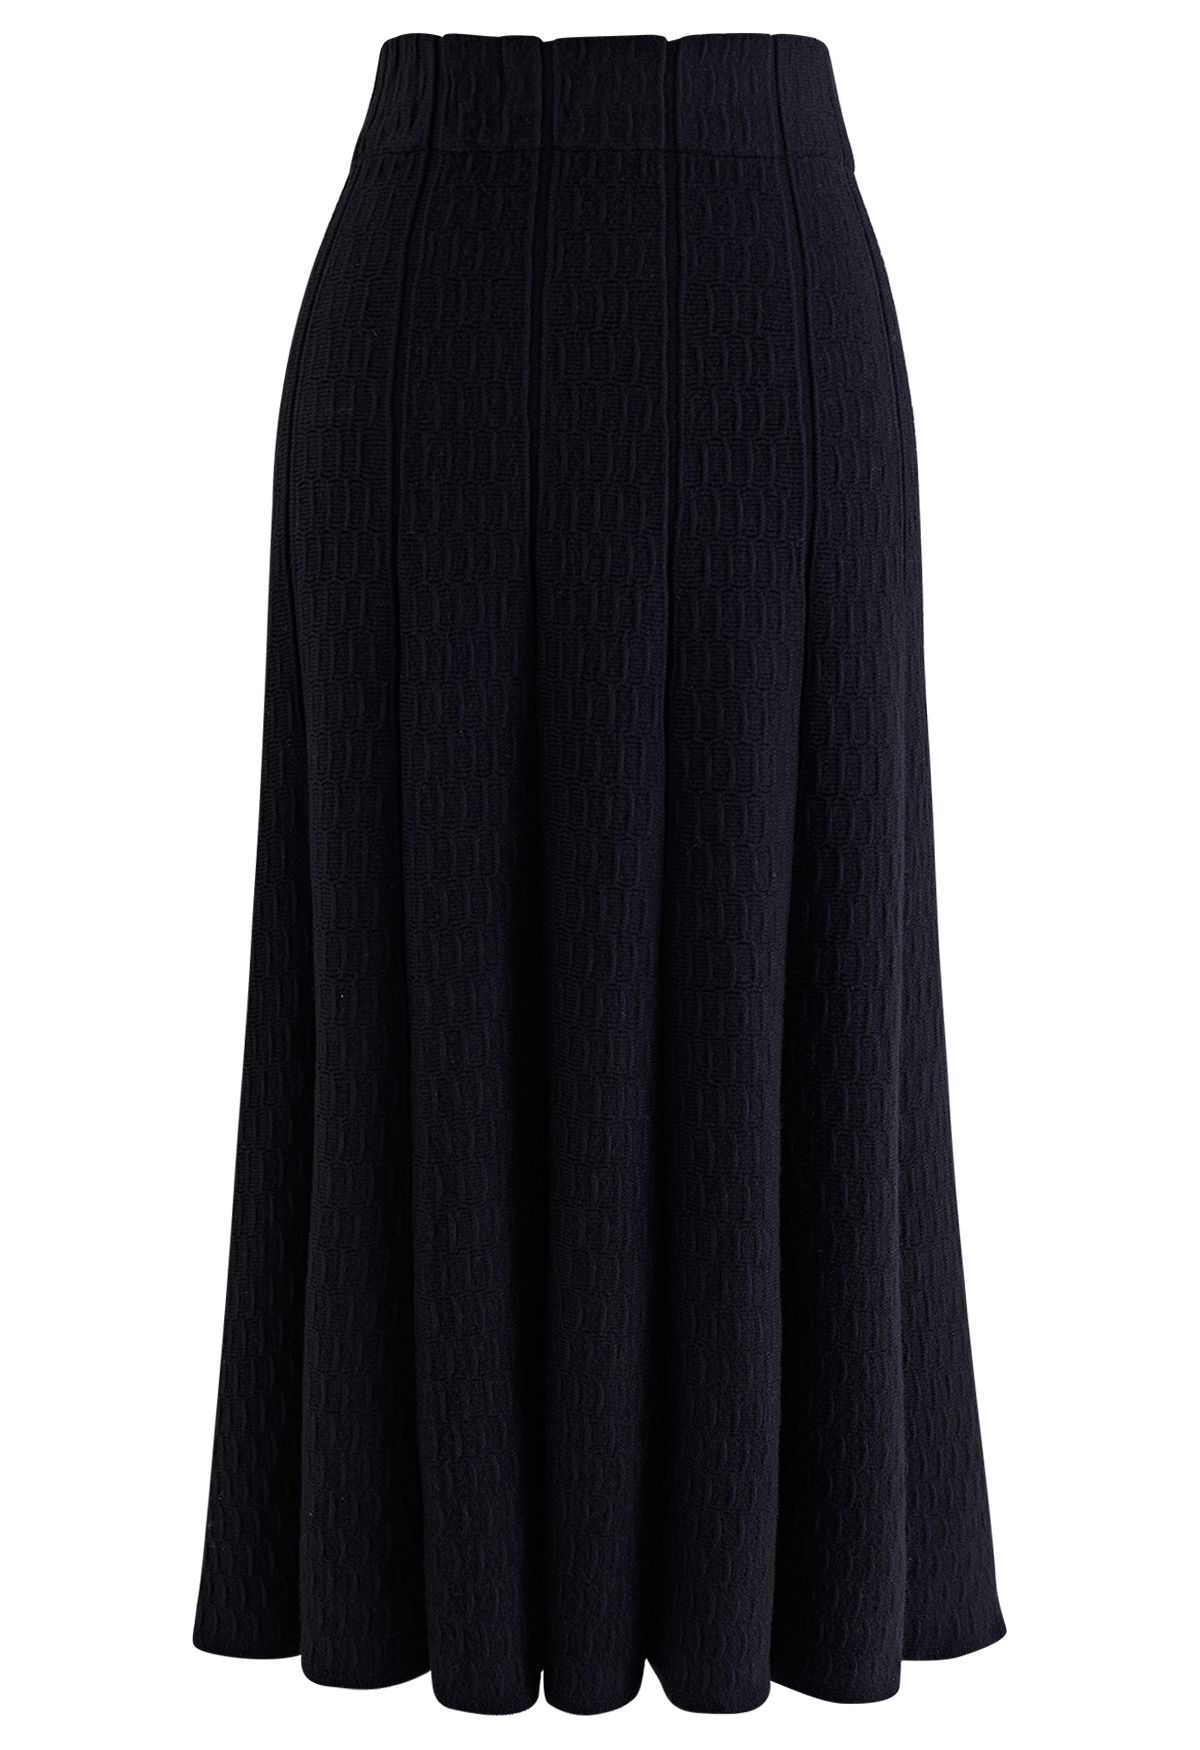 Embossed Texture Soft Knit Frilling Skirt in Black